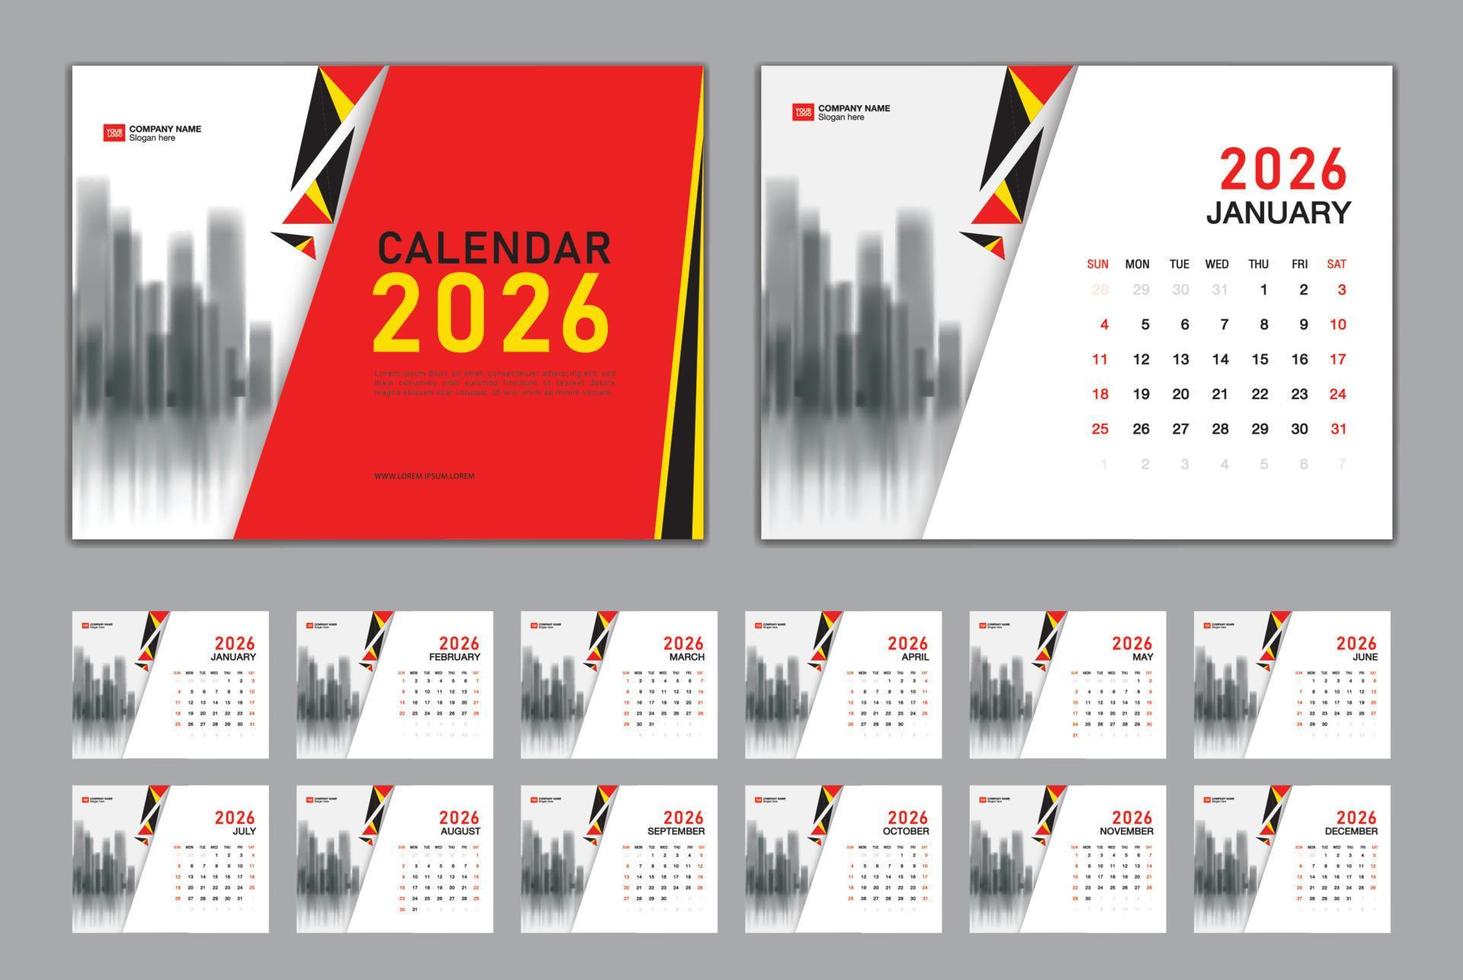 Calendar 2026 template set vector, Week starts Sunday, set of 12 month, Desk calendar 2026 year, wall calendar 2026 layout, business template, Stationery design, printing media, red cover design vector